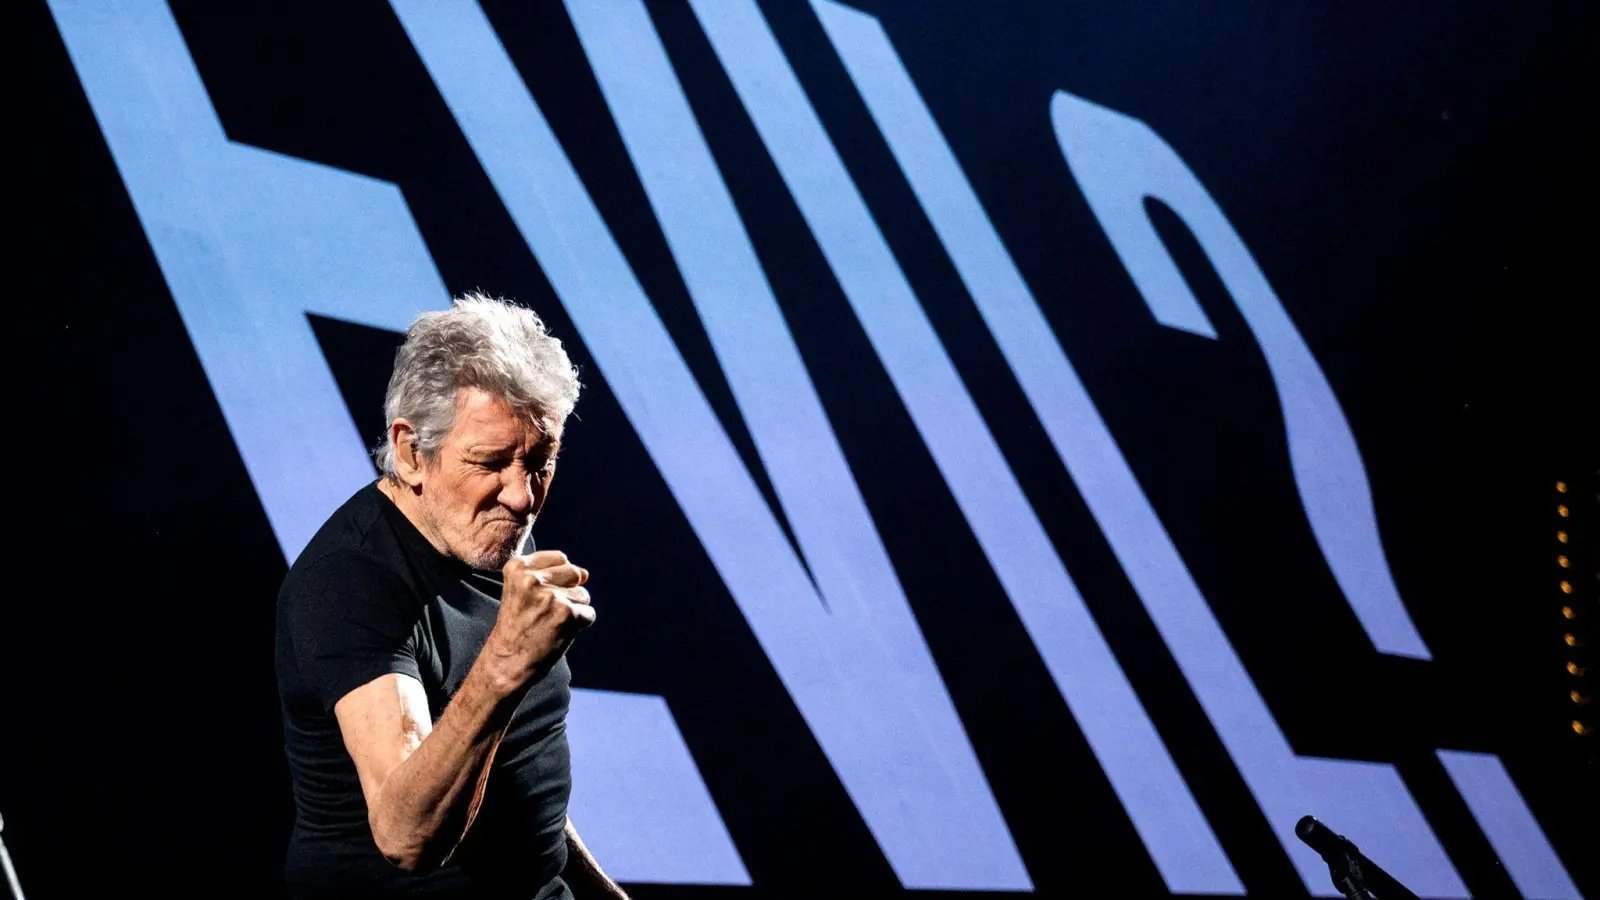 Roger Waters wehrt sich gegen die Vorwürfe. (Foto: Daniel Bockwoldt/dpa)